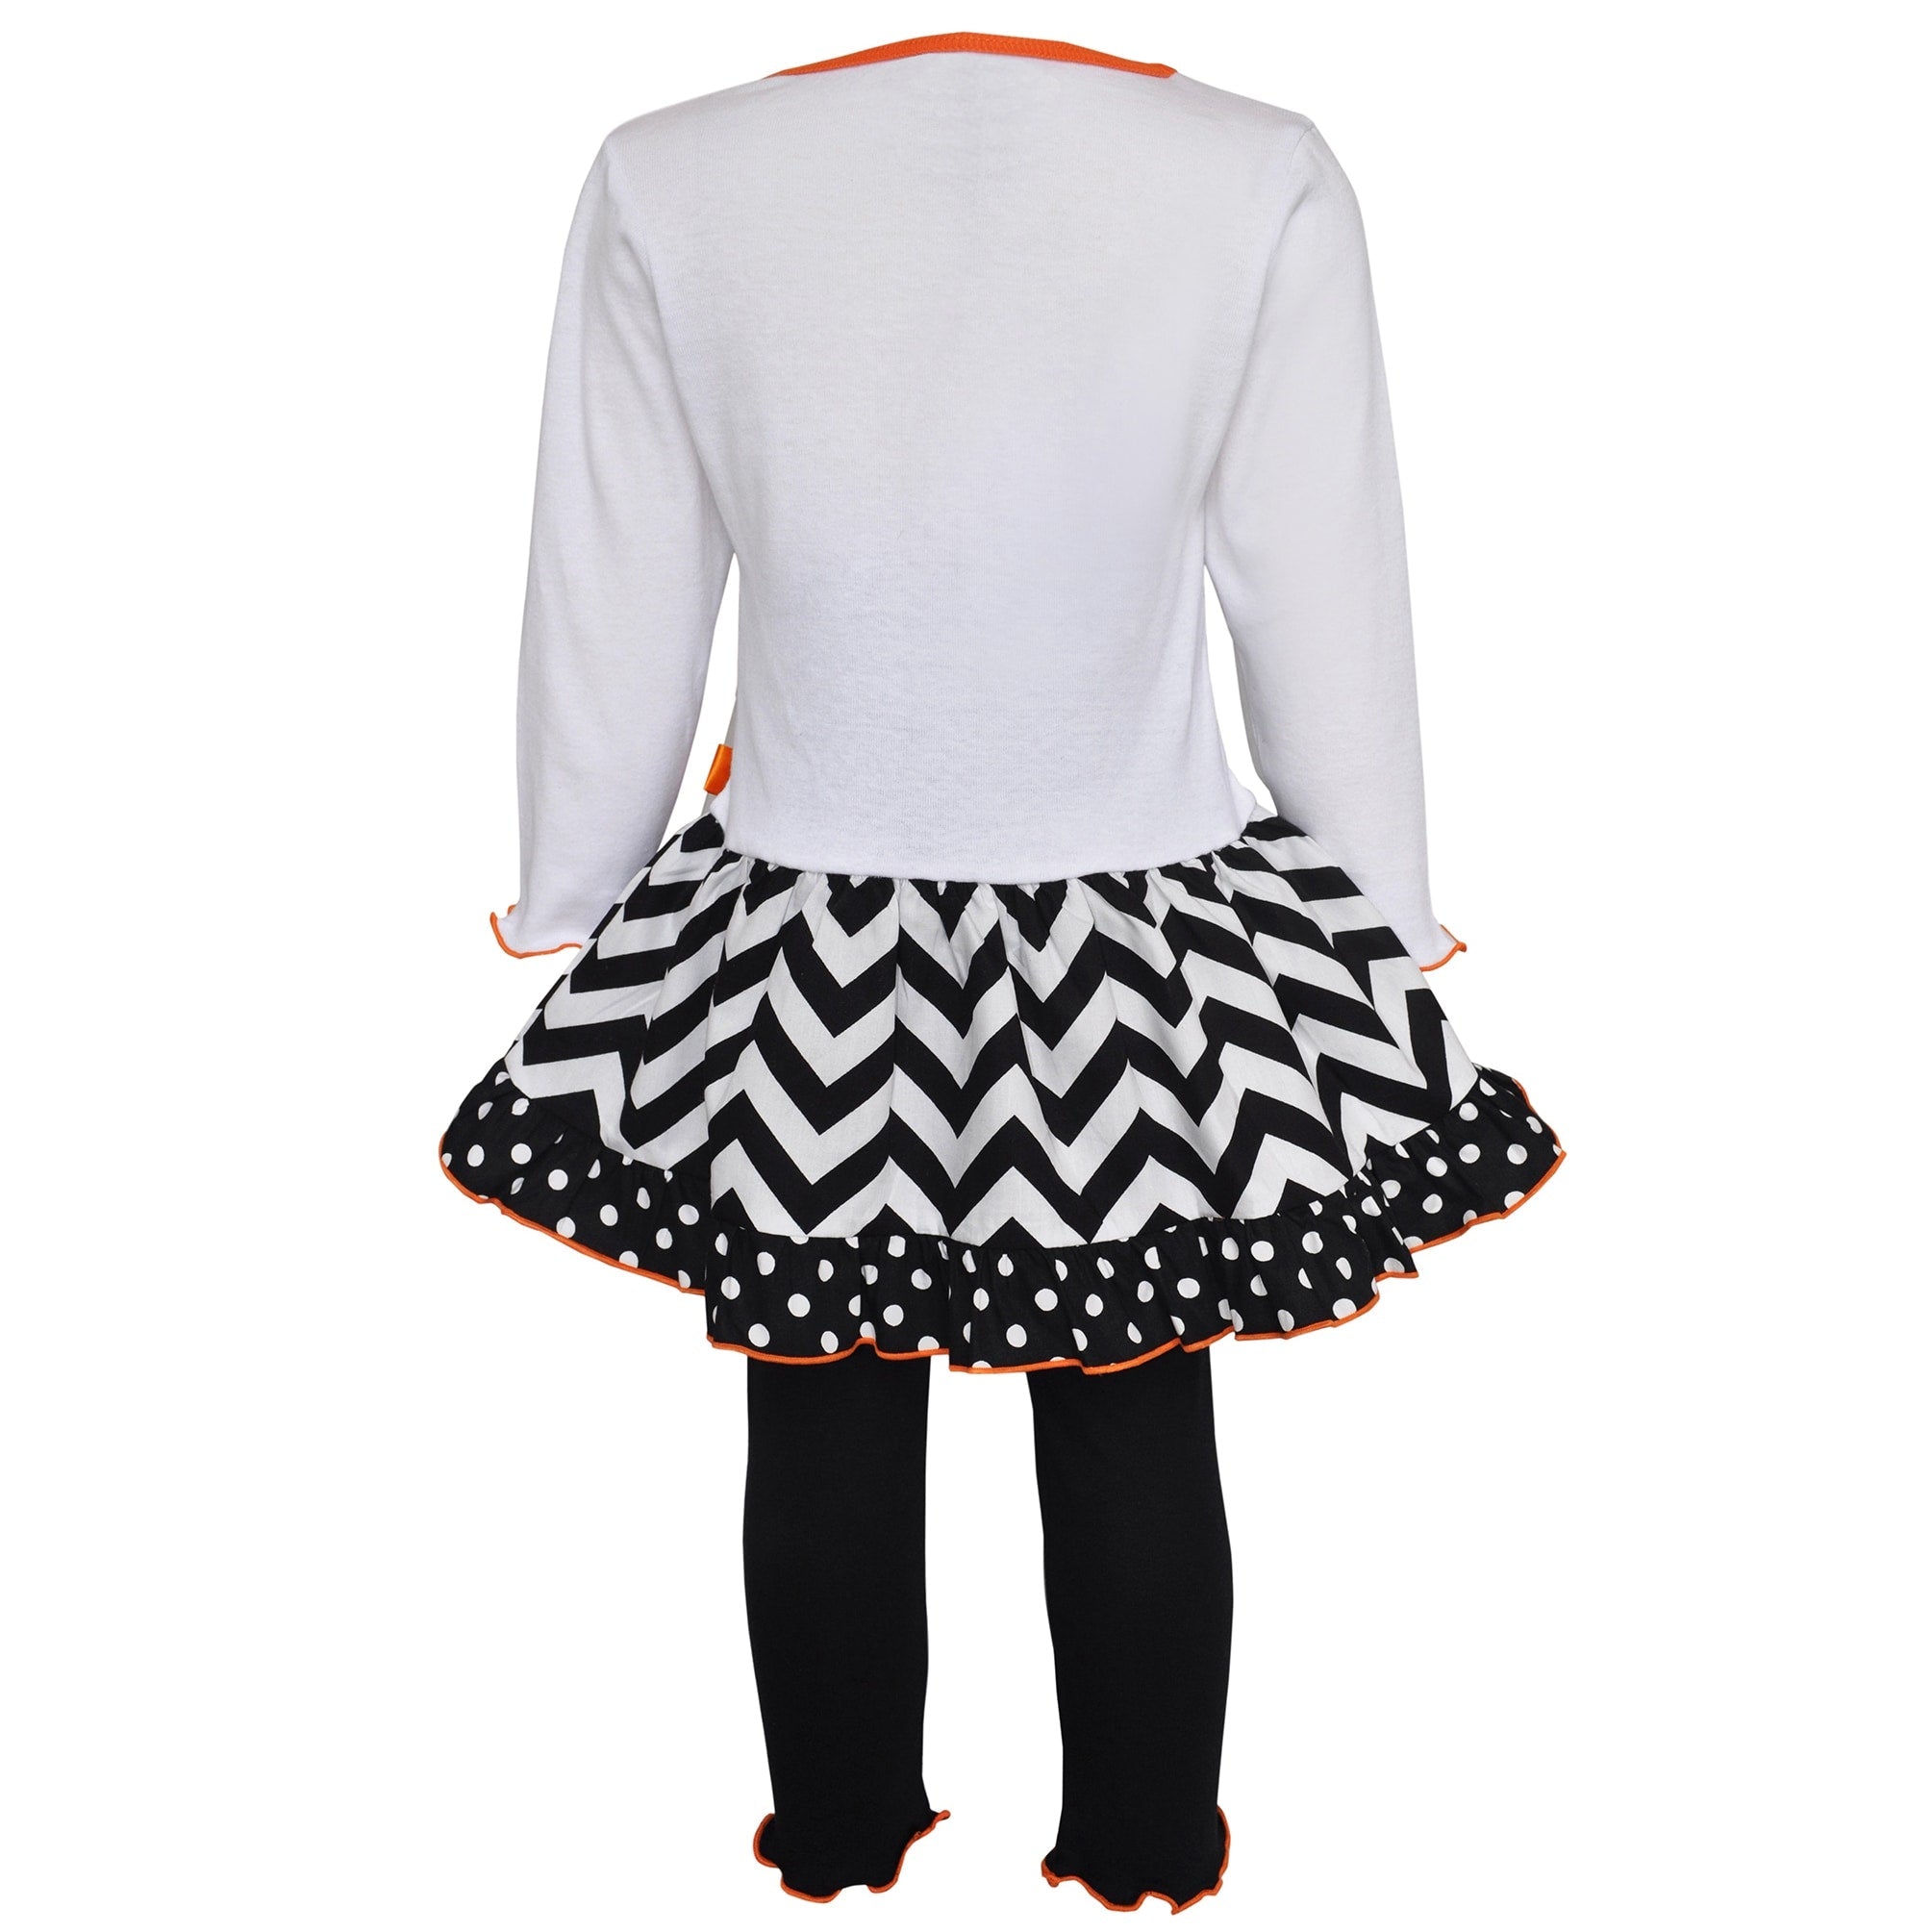 AnnLoren Girls' Halloween Orange Pumpkin and Black Cat Dress & Leggings Outfit-7